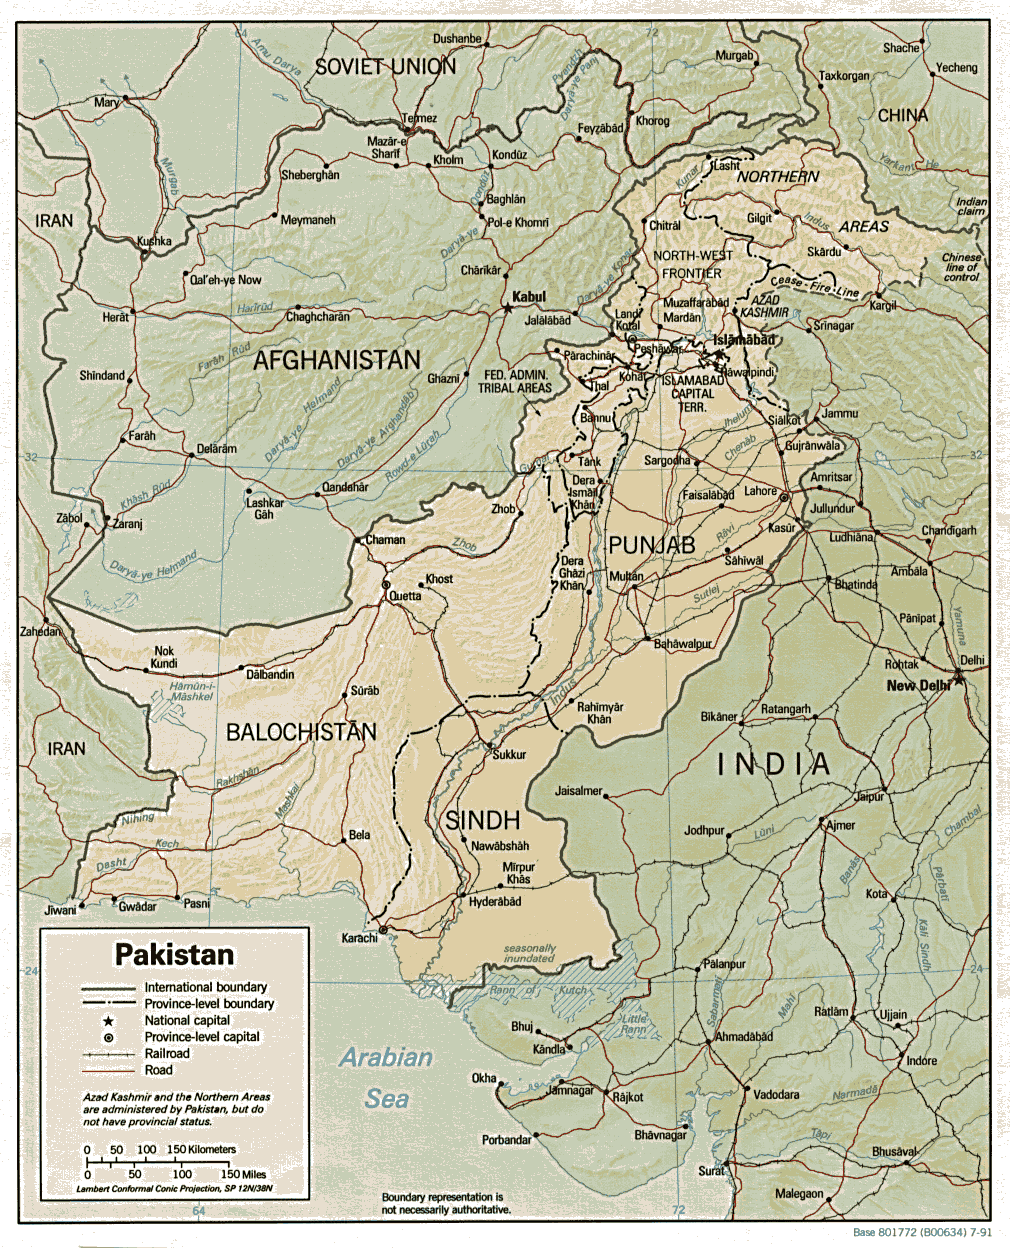 PAKISTAN MAP AND BONDAIRES